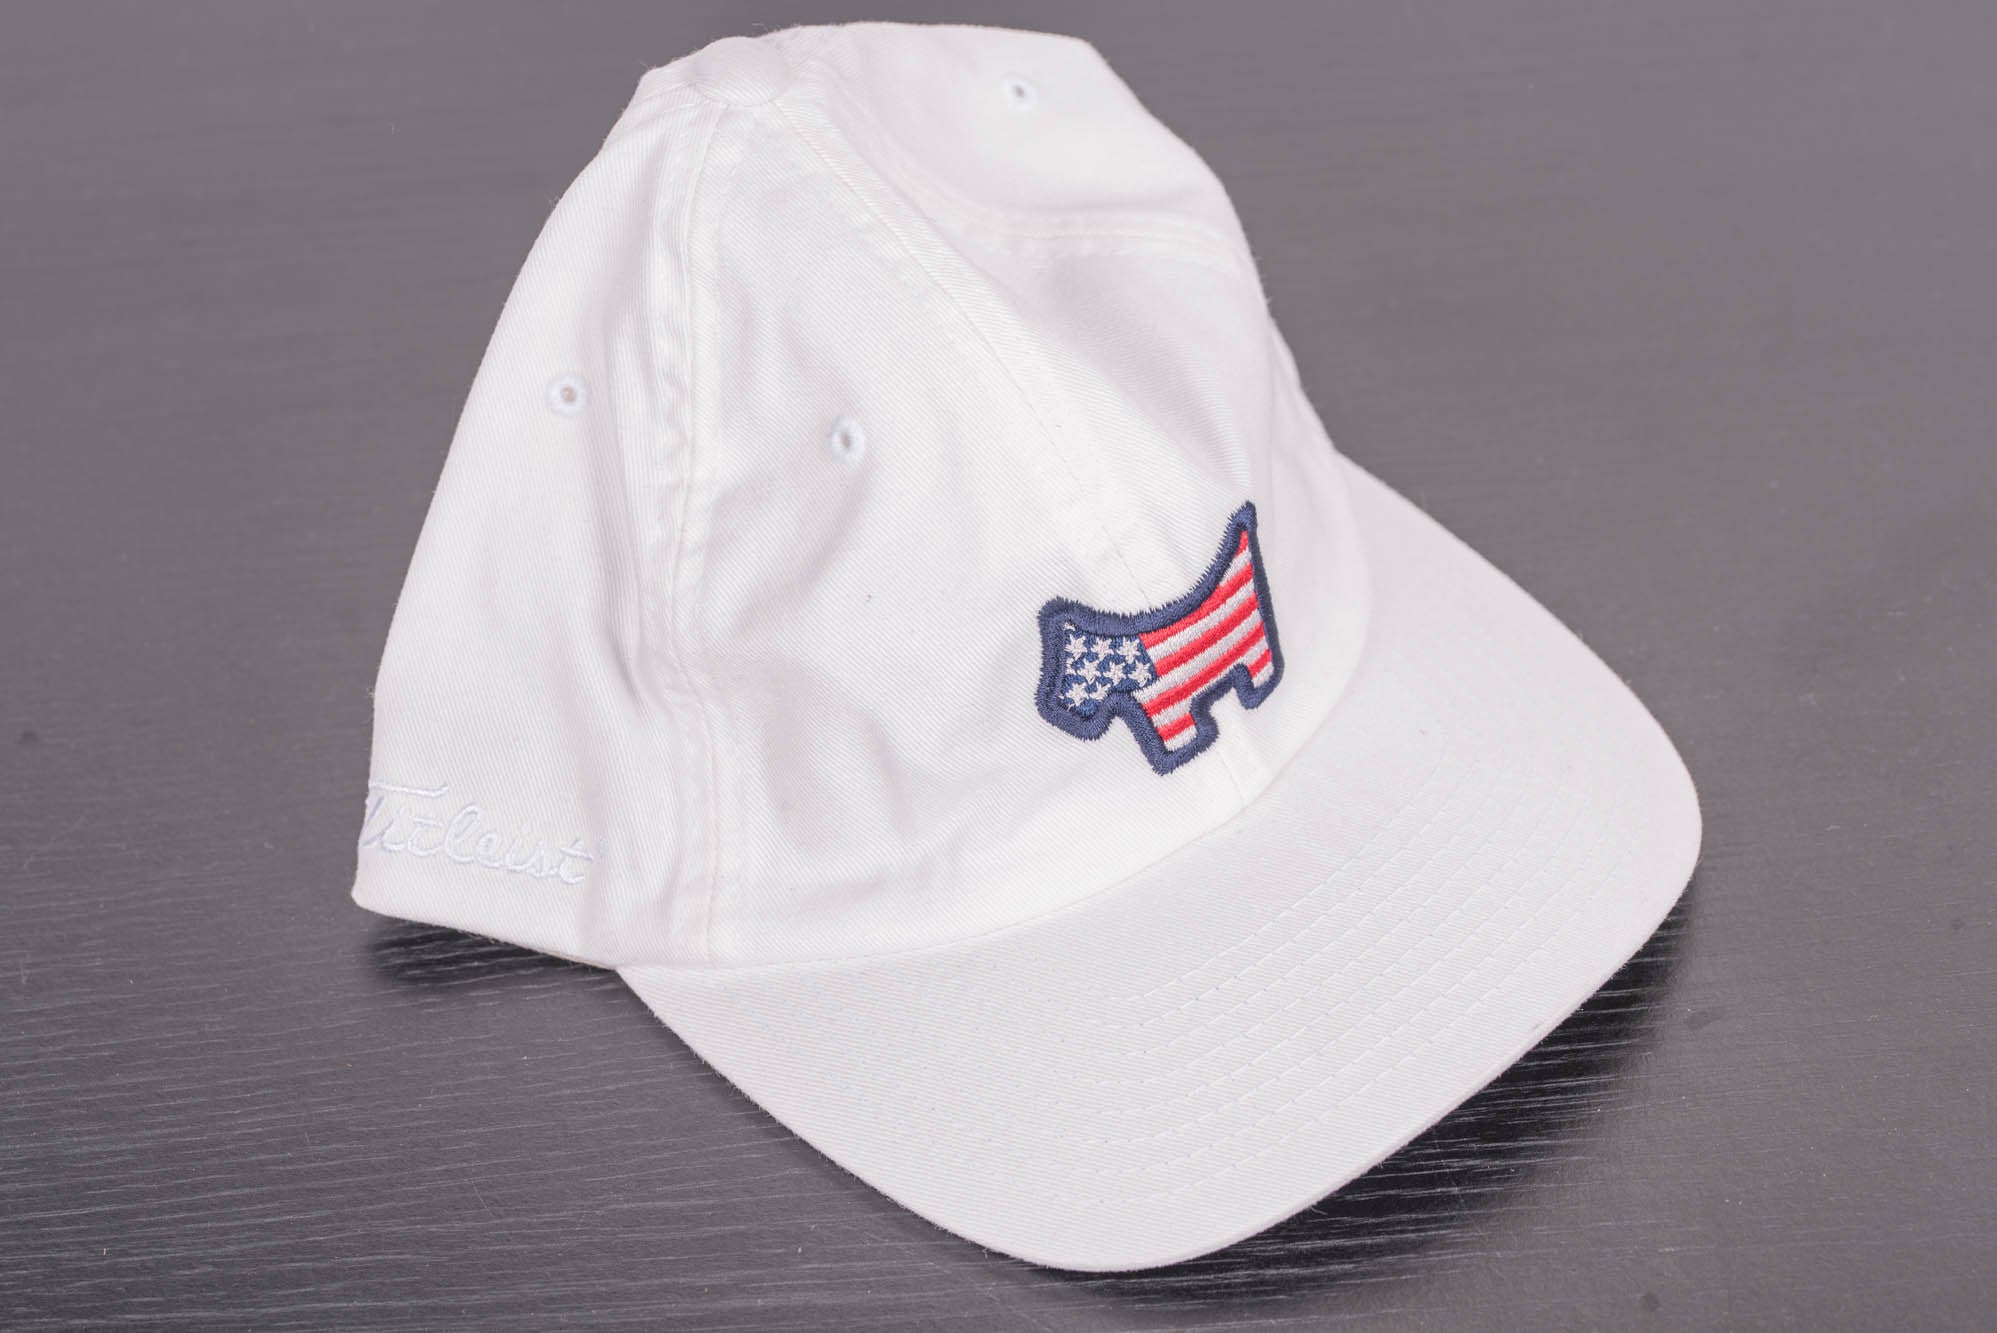 2017 US Open Americana Classic white hat